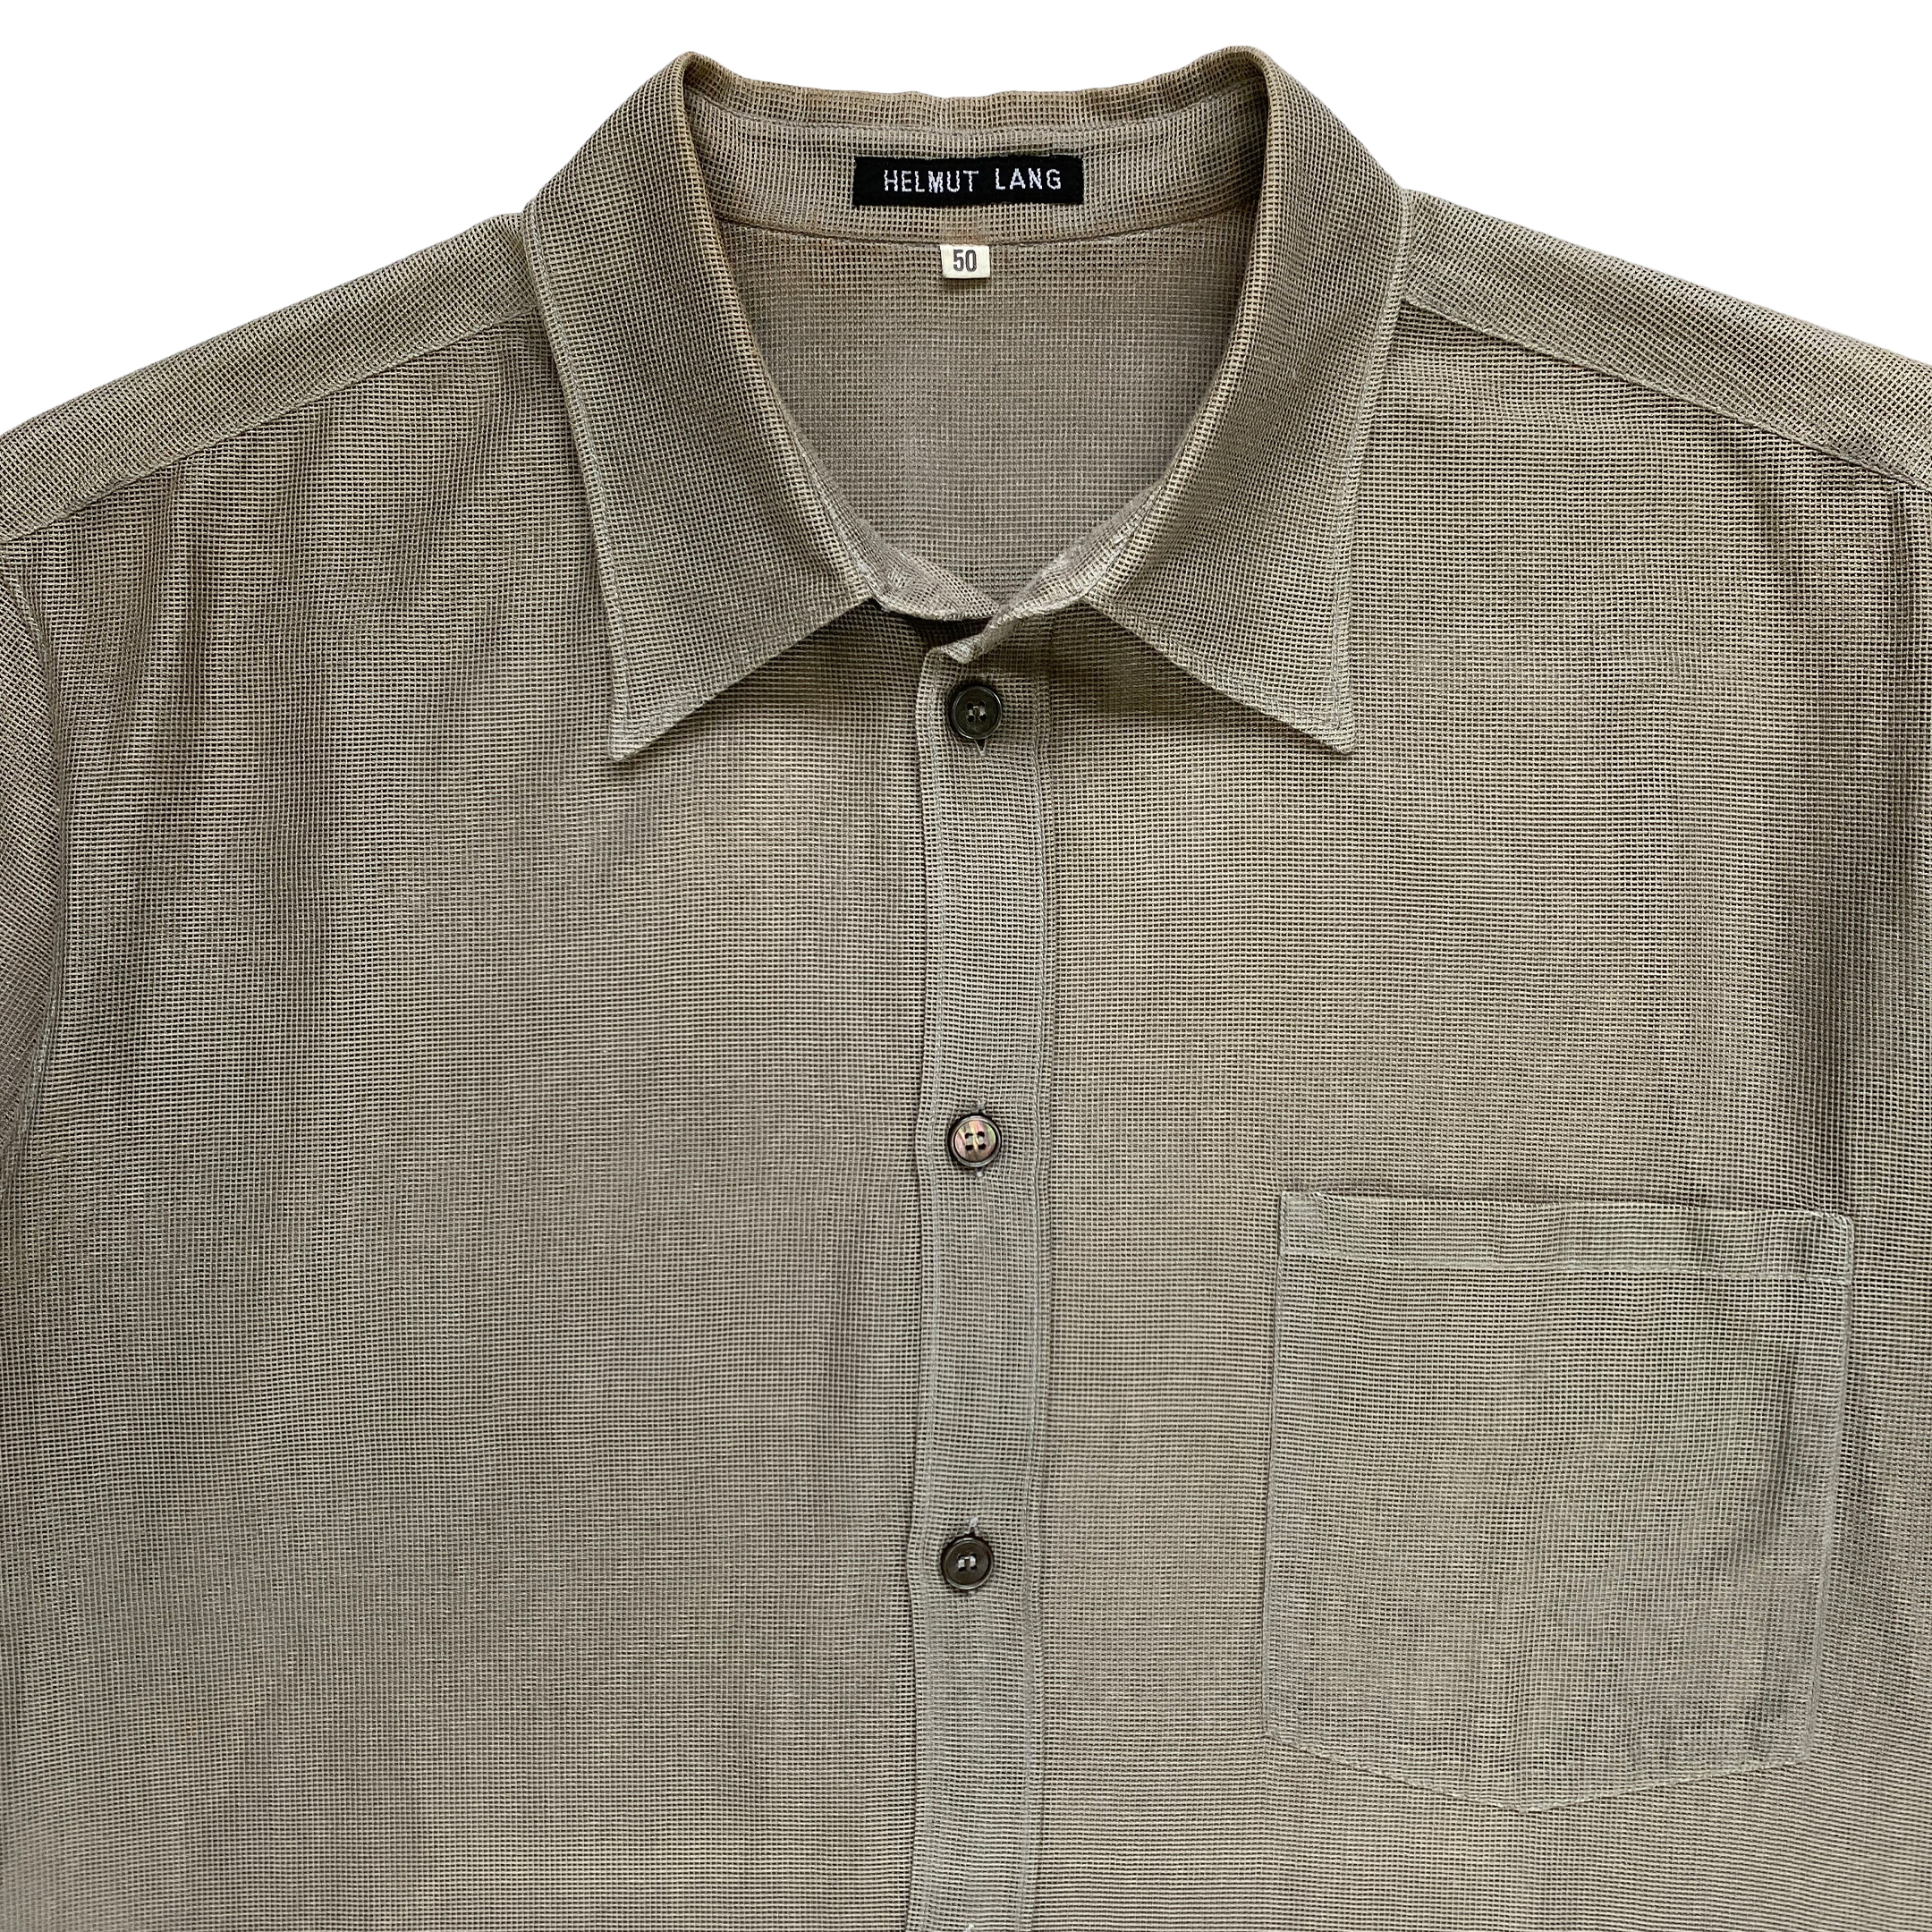 Helmut Lang, S/S 1996 Khaki Green Nylon Mesh Button-up Shirt - La 